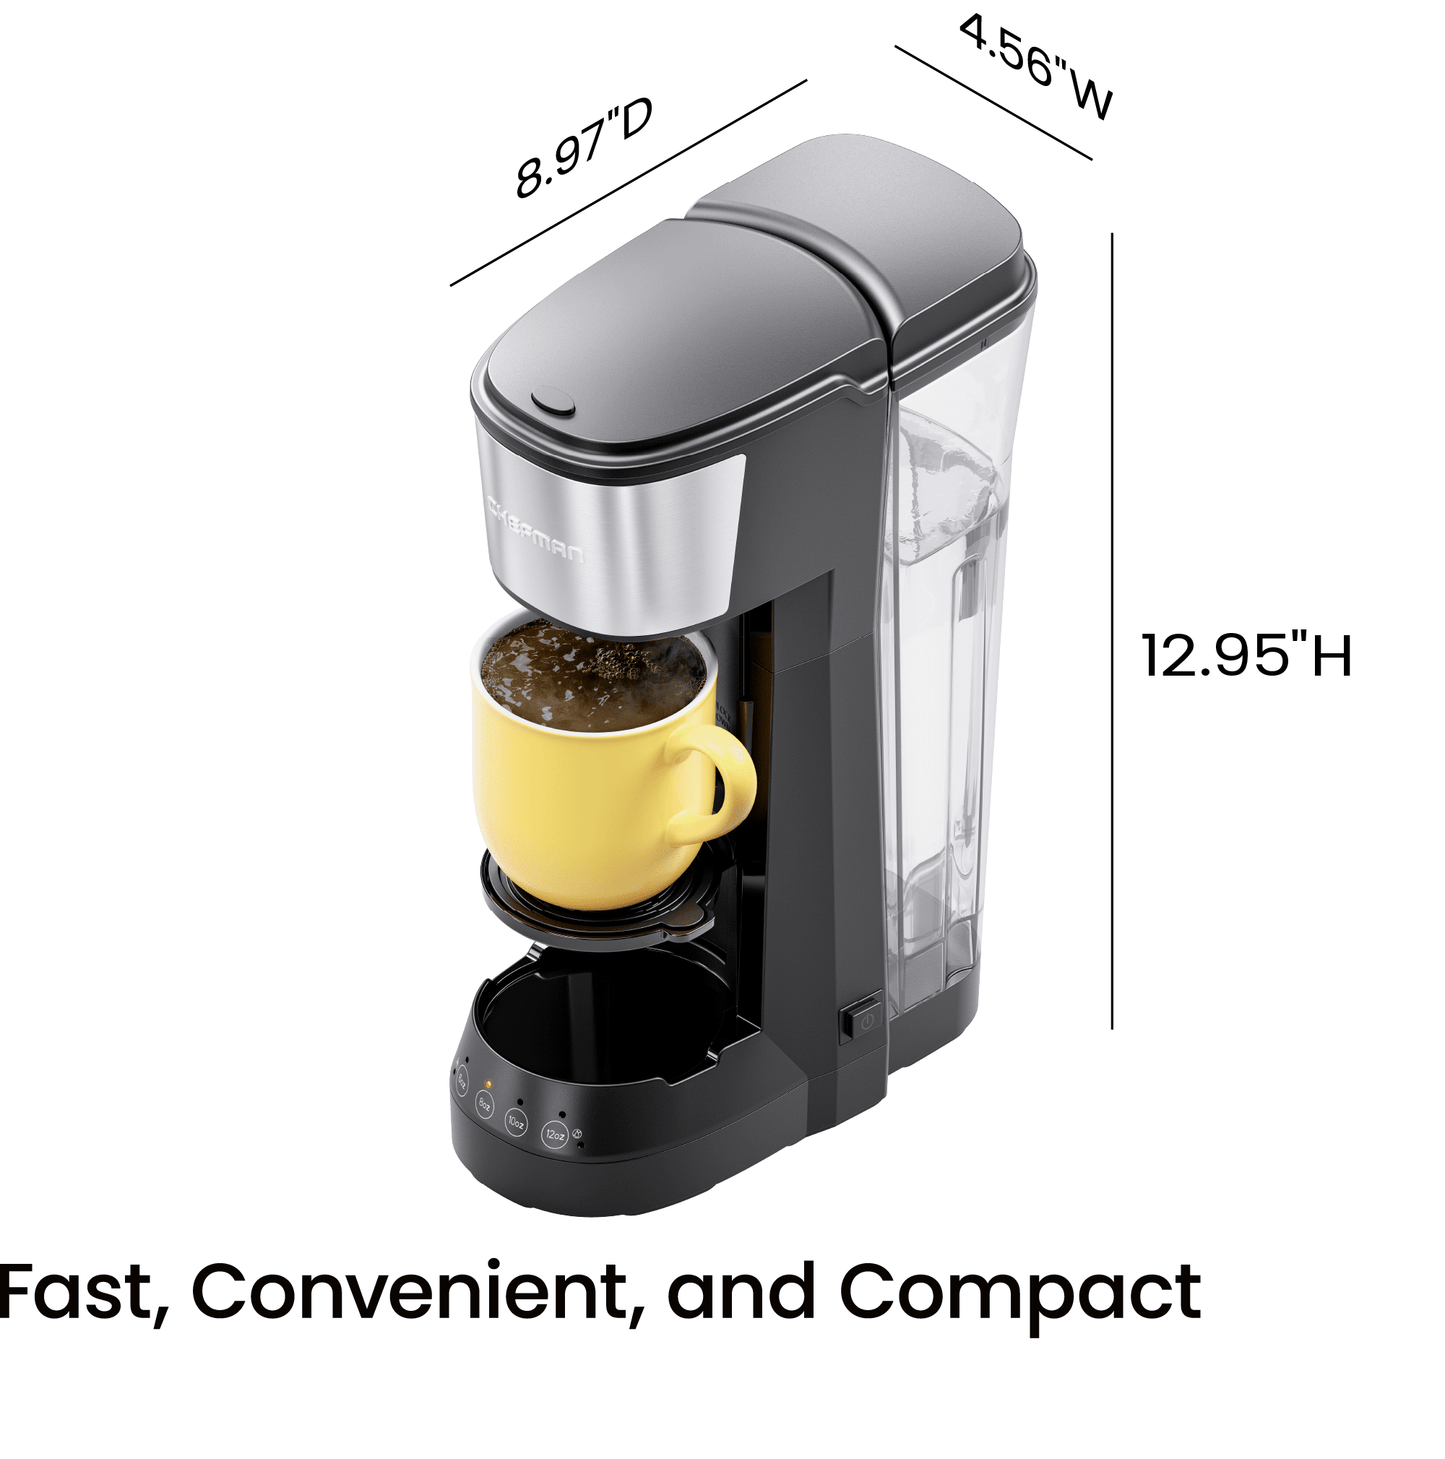 Single Serve Coffee Maker: K-Cup/Ground Compatible, 6-12oz Cup, 40oz Reservoir